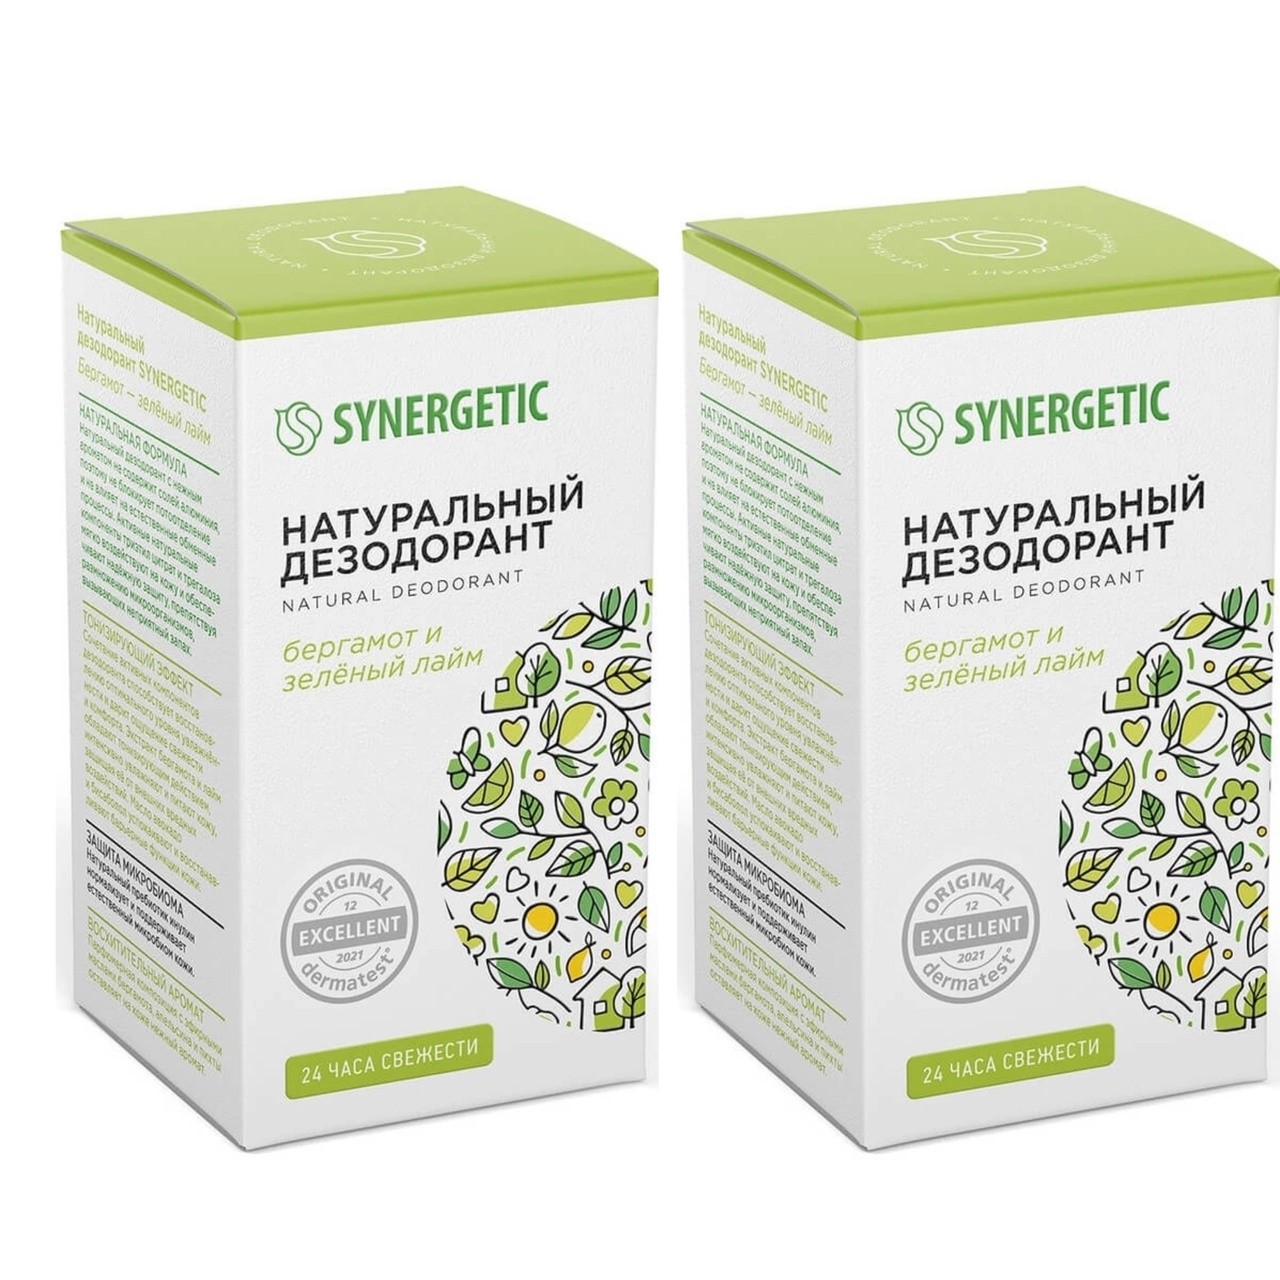 Натуральный дезодорант Synergetic бергамот - зеленый лайм 50 мл 2 шт дезодорант synergetic бергамот зеленый лайм натуральный 50 мл